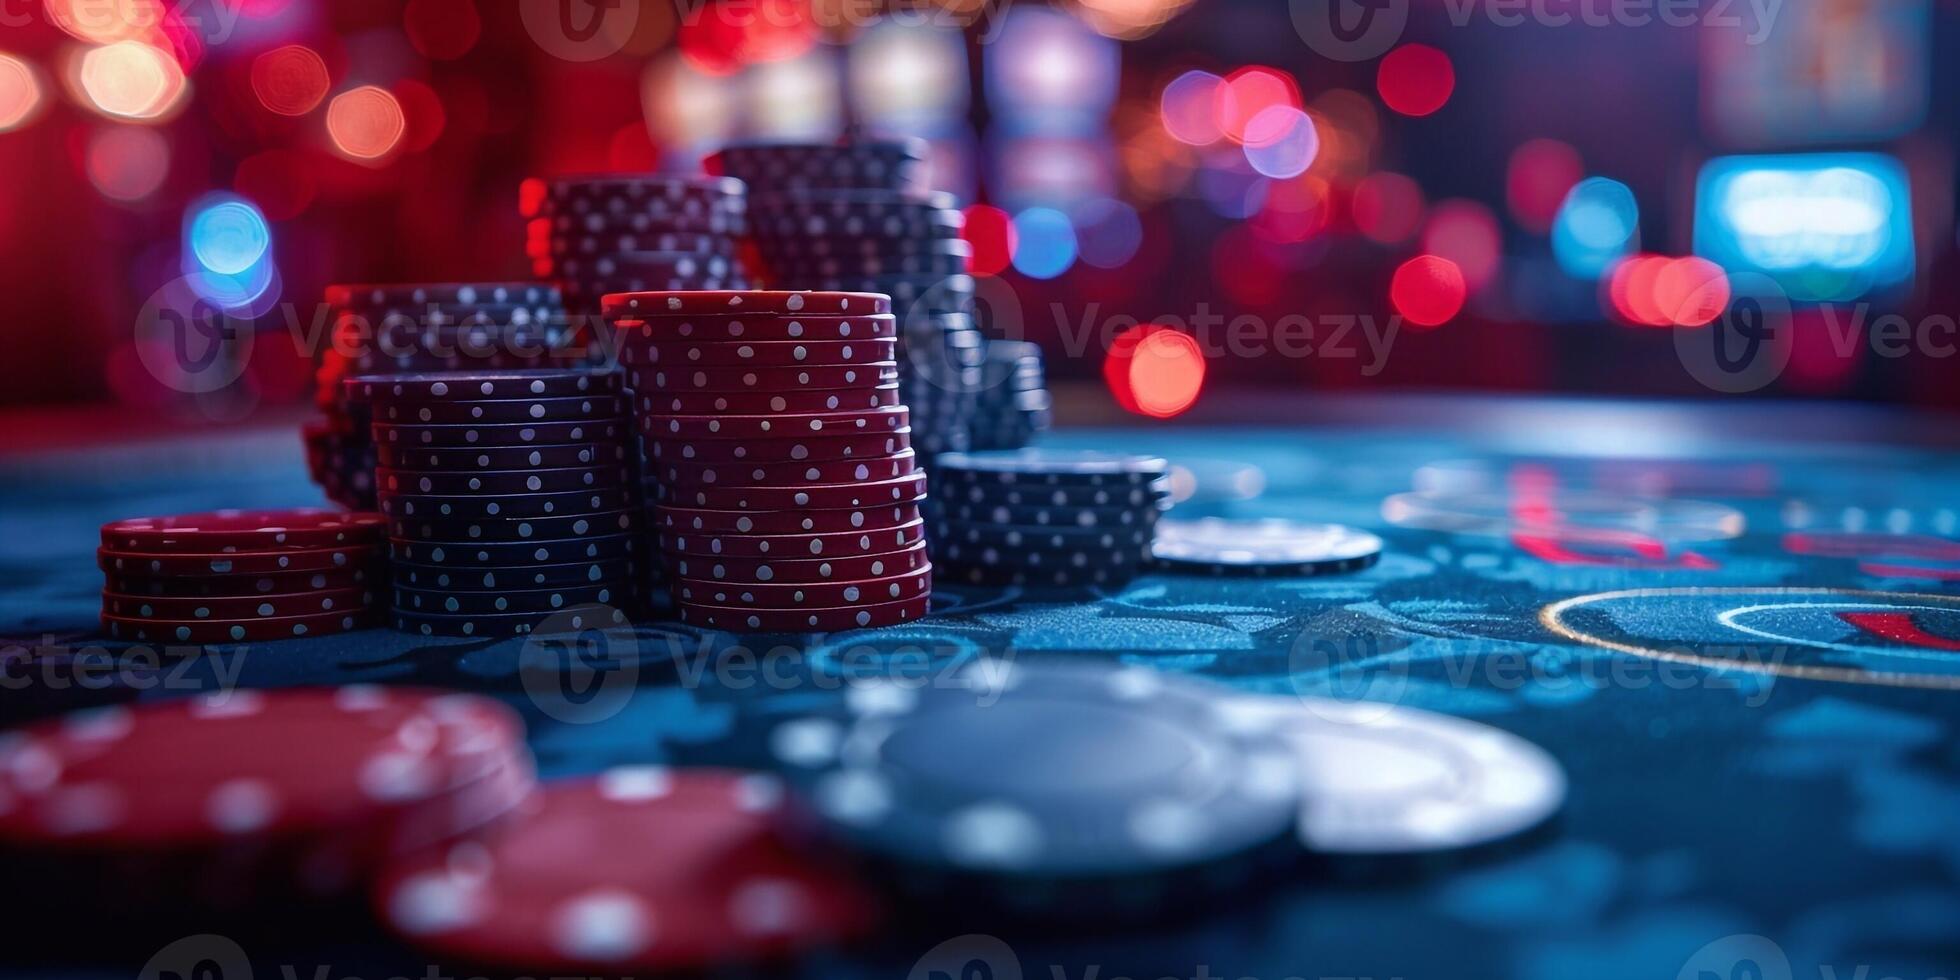 ai generado póker papas fritas en mesa en casino foto